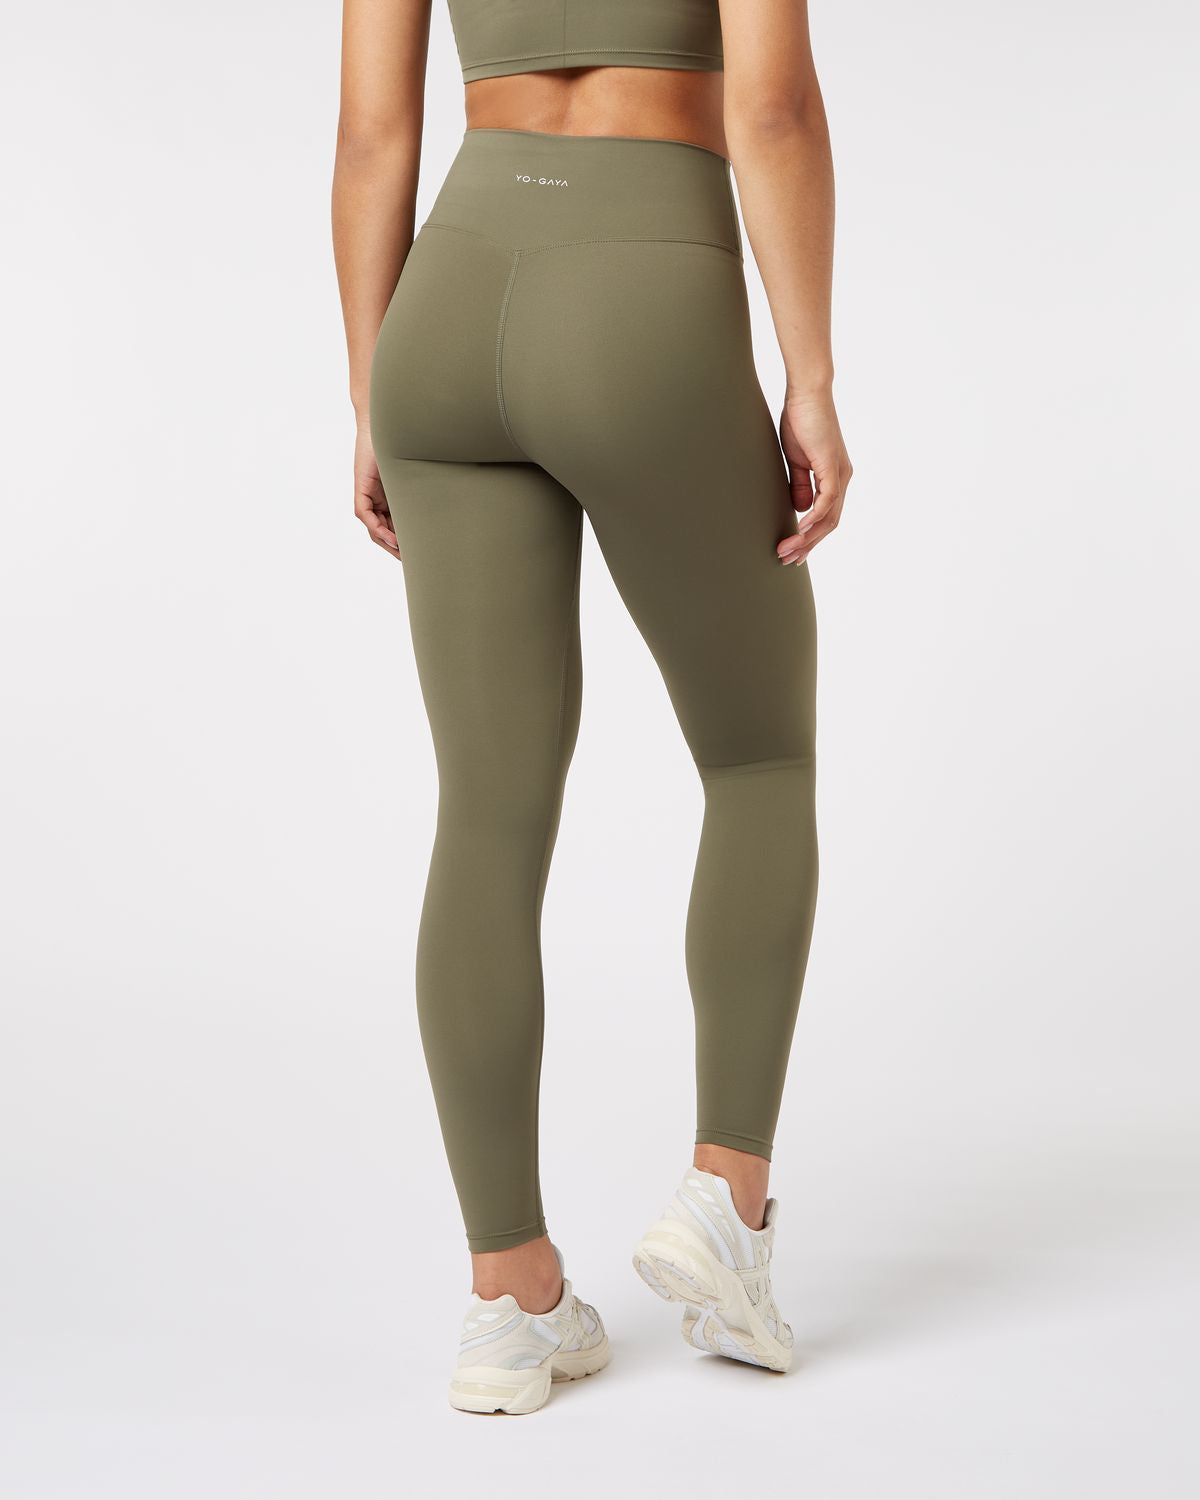 GAYHAY Women's Olive Green Pull-on High Waisted Leggings Yoga